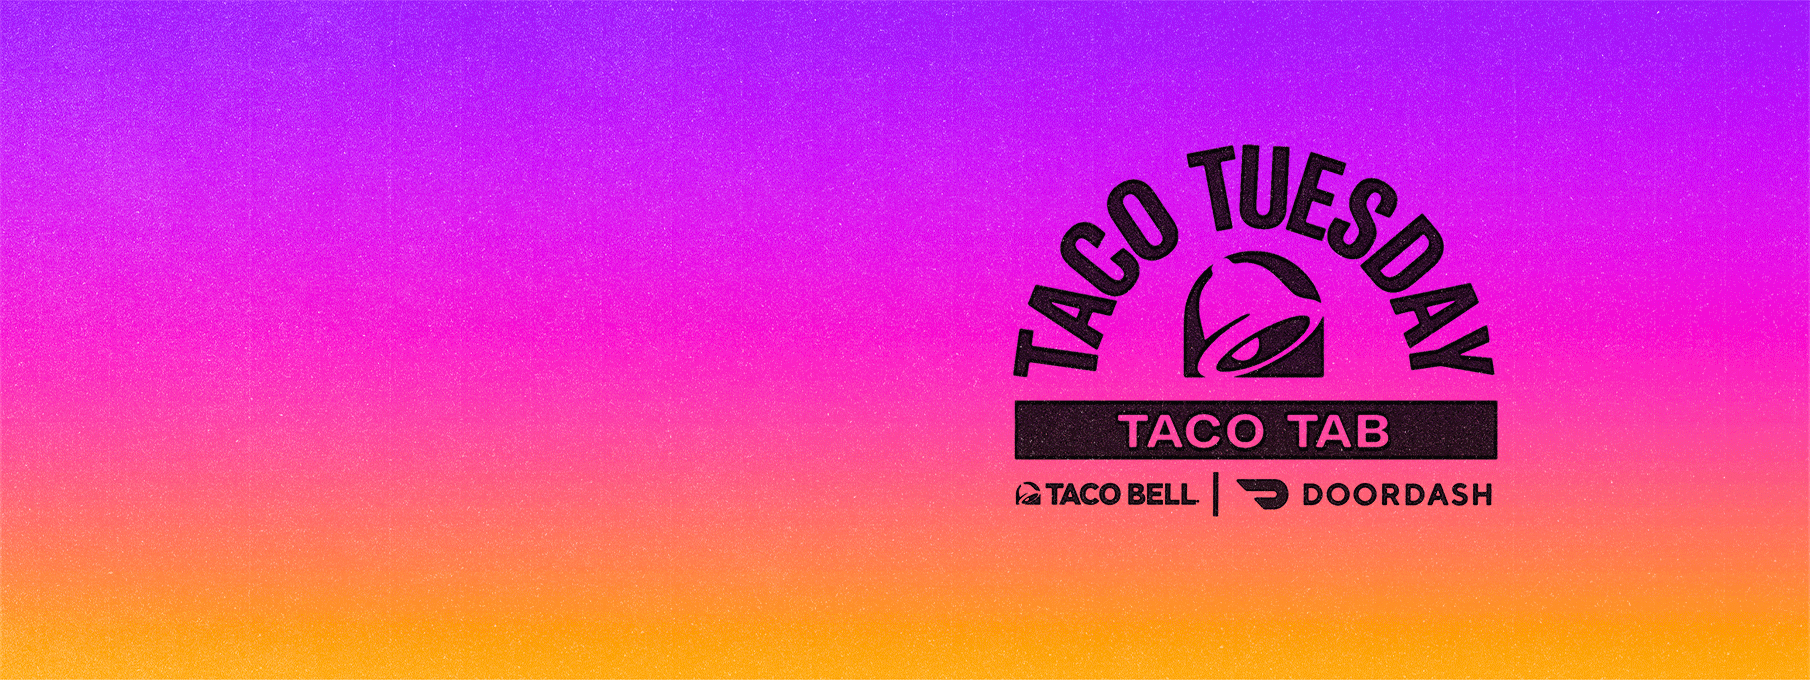 The Lowdown: Taco Tuesday